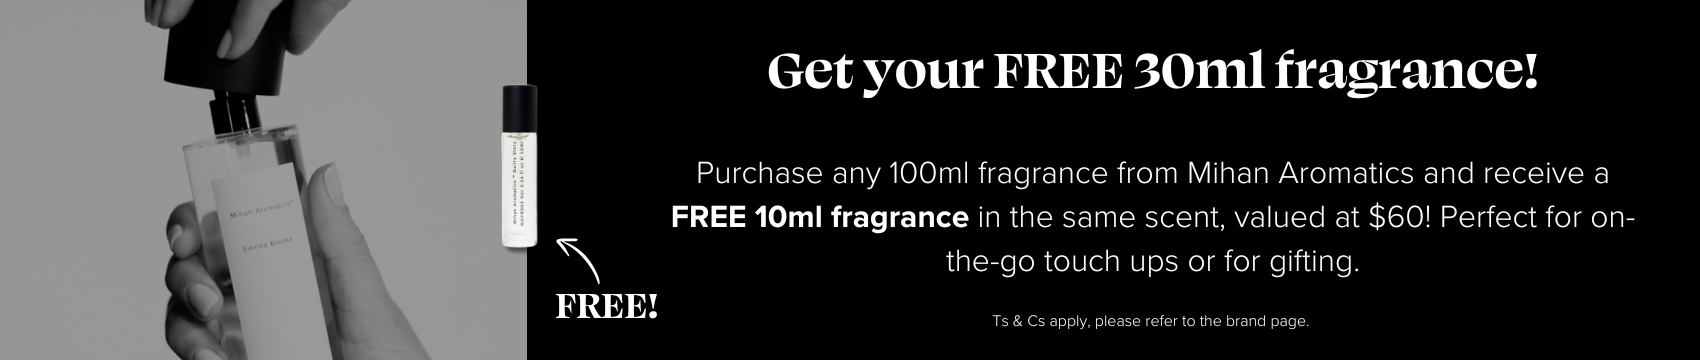 Free Perfume from Mihan Aromatics